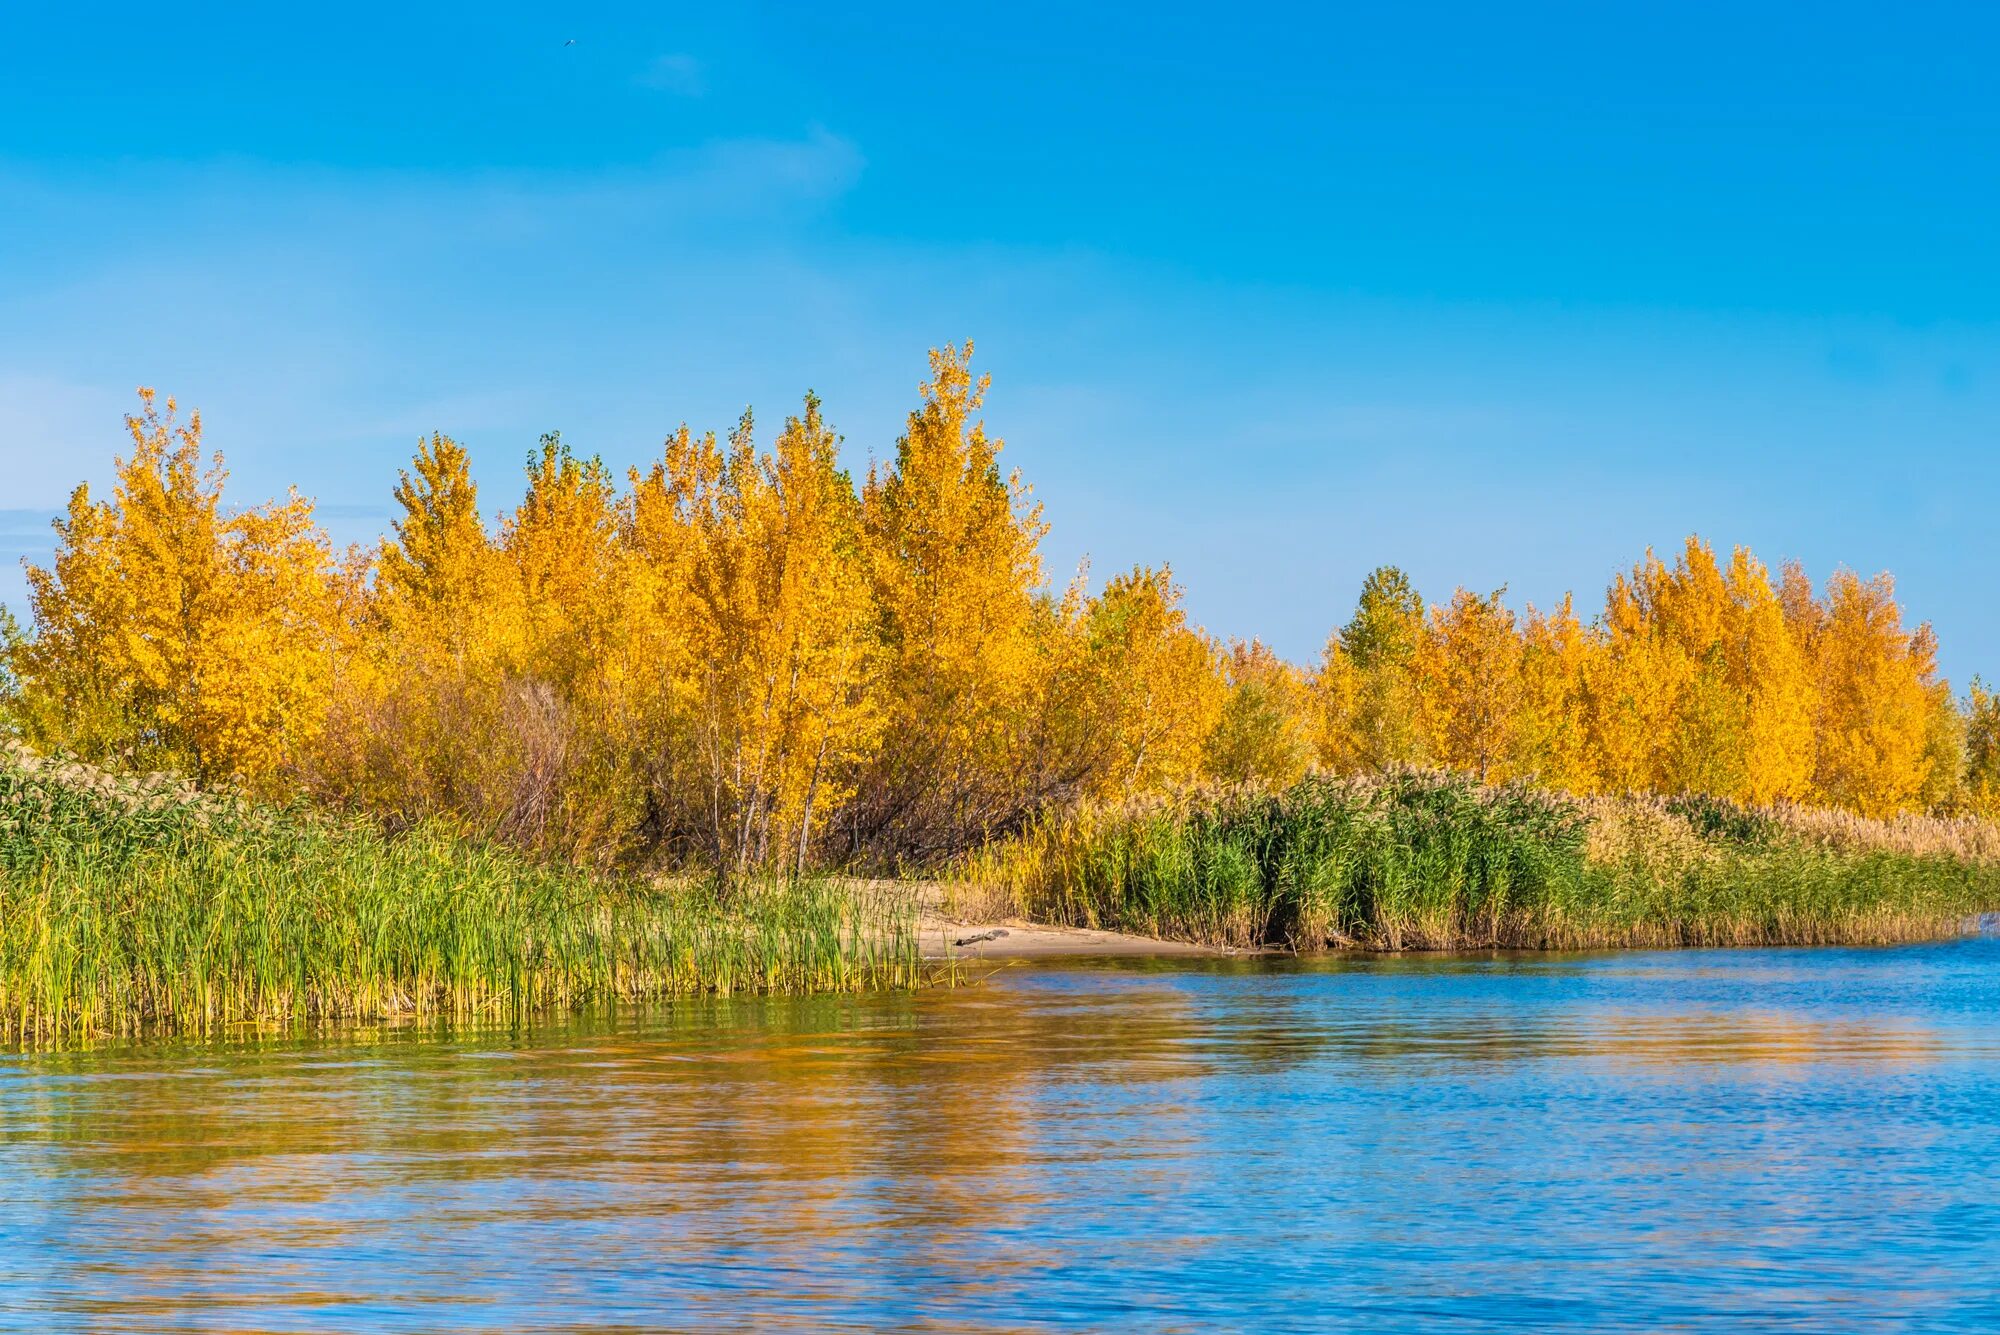 Реки россии осенью. Пейзаж осени. Осень река. Осенняя река. Природа осень.